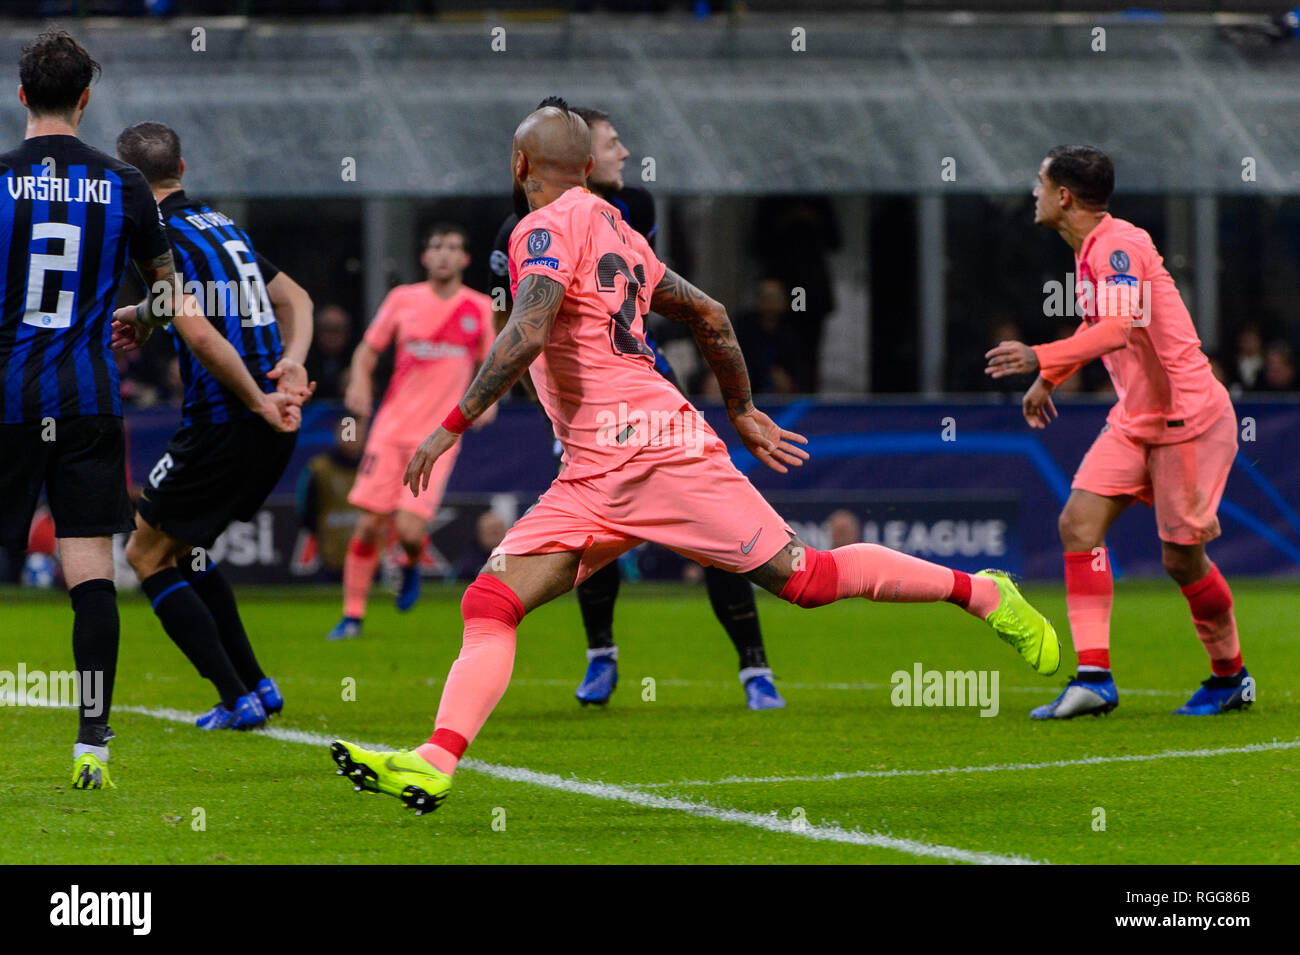 Mailand - Nov 6, 2018: Arturo Vidal Angriffe. FC Internazionale - FC Barcelona. UEFA Champions League. Spieltag 4. Giuseppe Meazza (San Siro) Stadium. Stockfoto